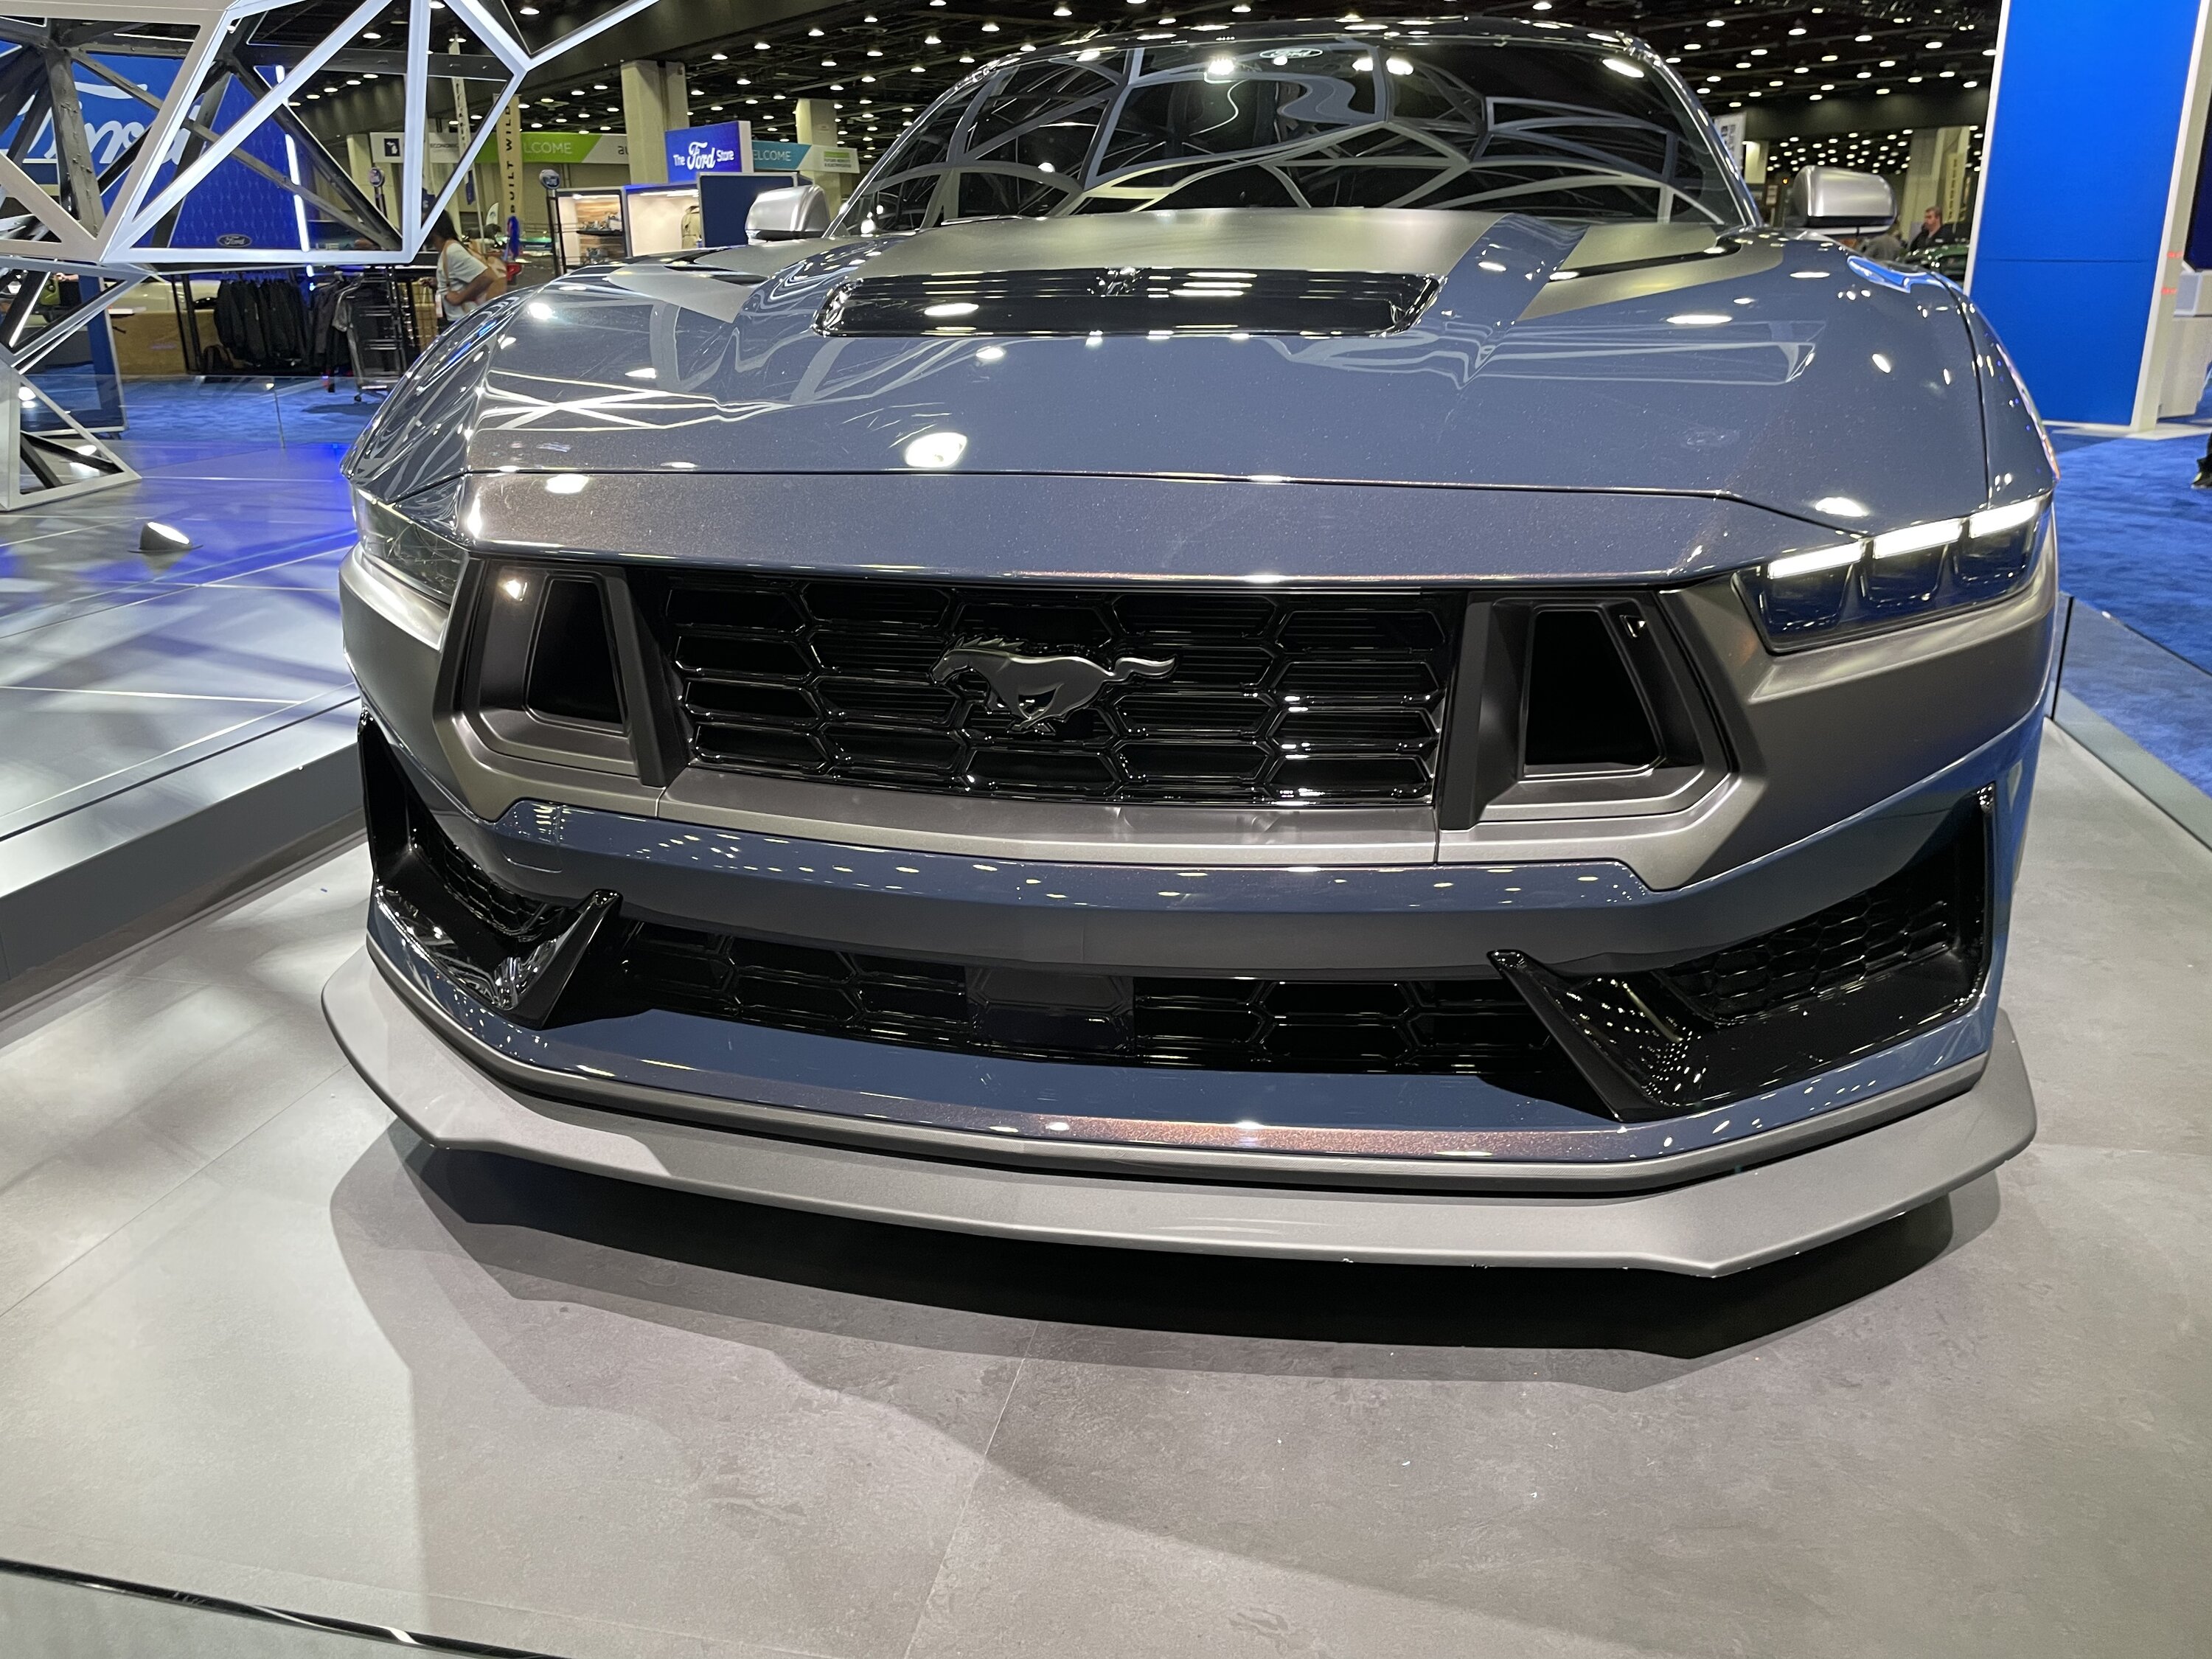 S650 Mustang My live S650 Mustang GT Convertible & Dark Horse pics from 2022 Detroit Auto Show Floor 0361fa2d-2a80-4b65-a3d8-e59b6121a457-jpe